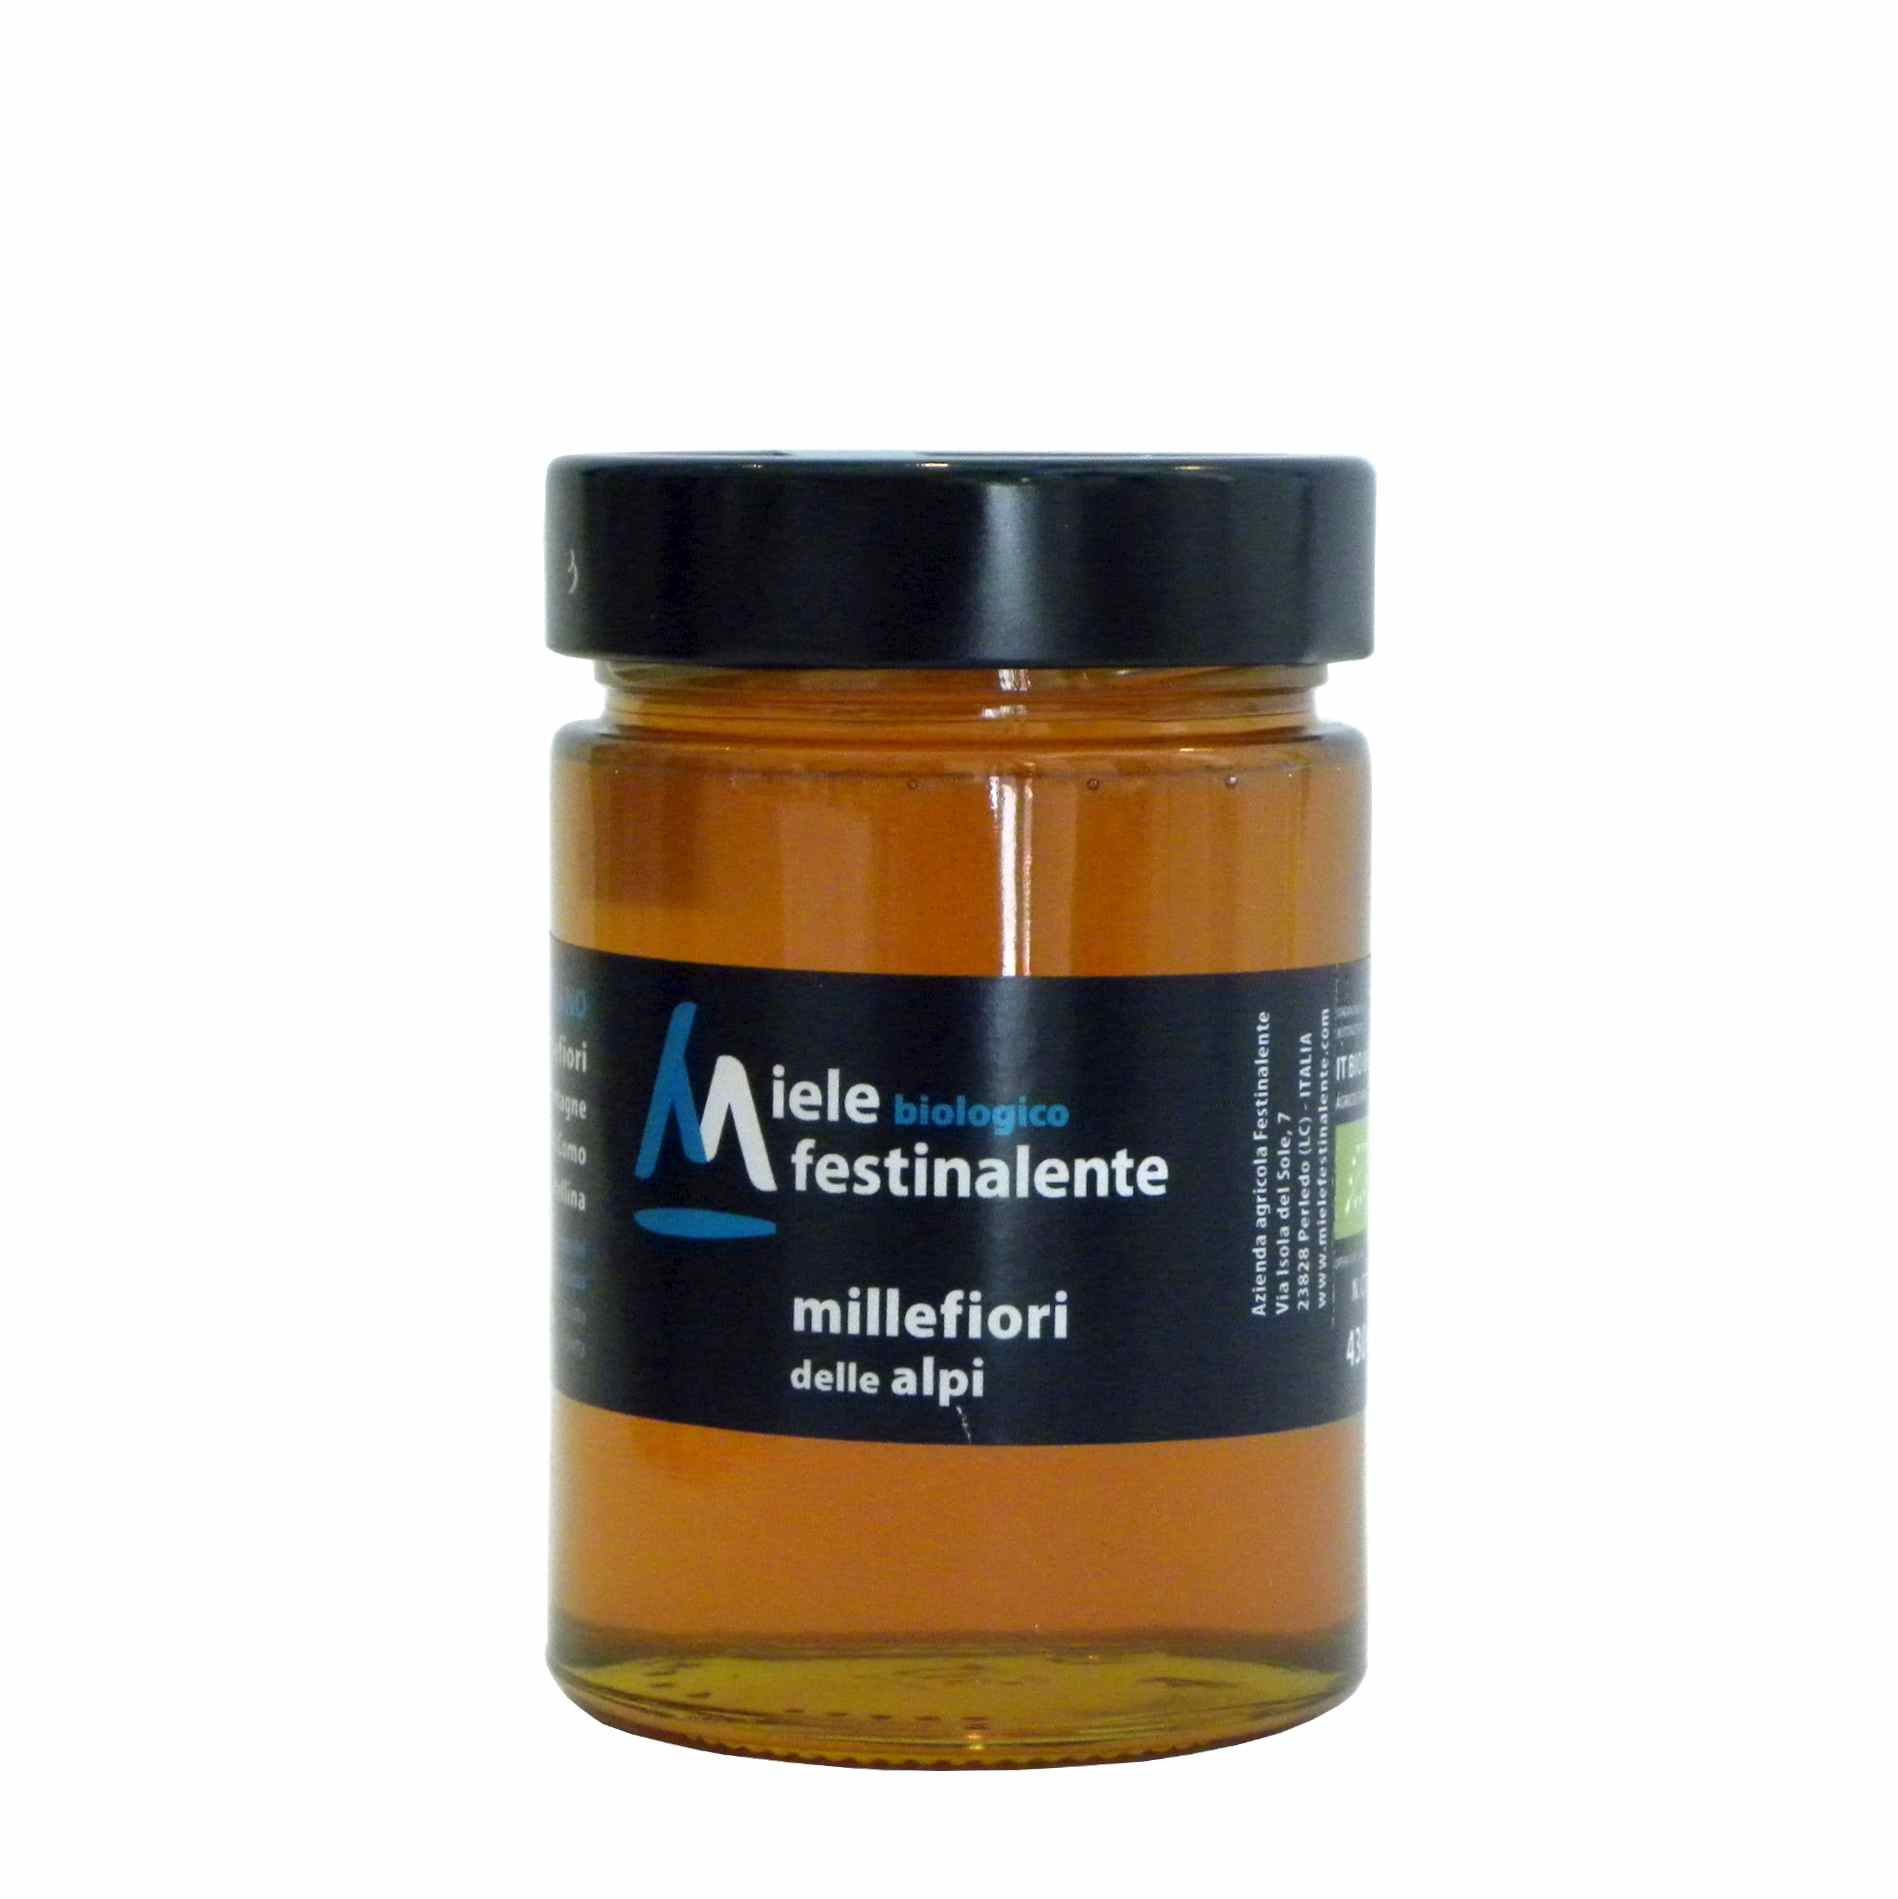 Festinalente miele bio millefiori alpi – Festinalente organic raw alps thousand flowers honey – Gustorotondo – Italian food boutique